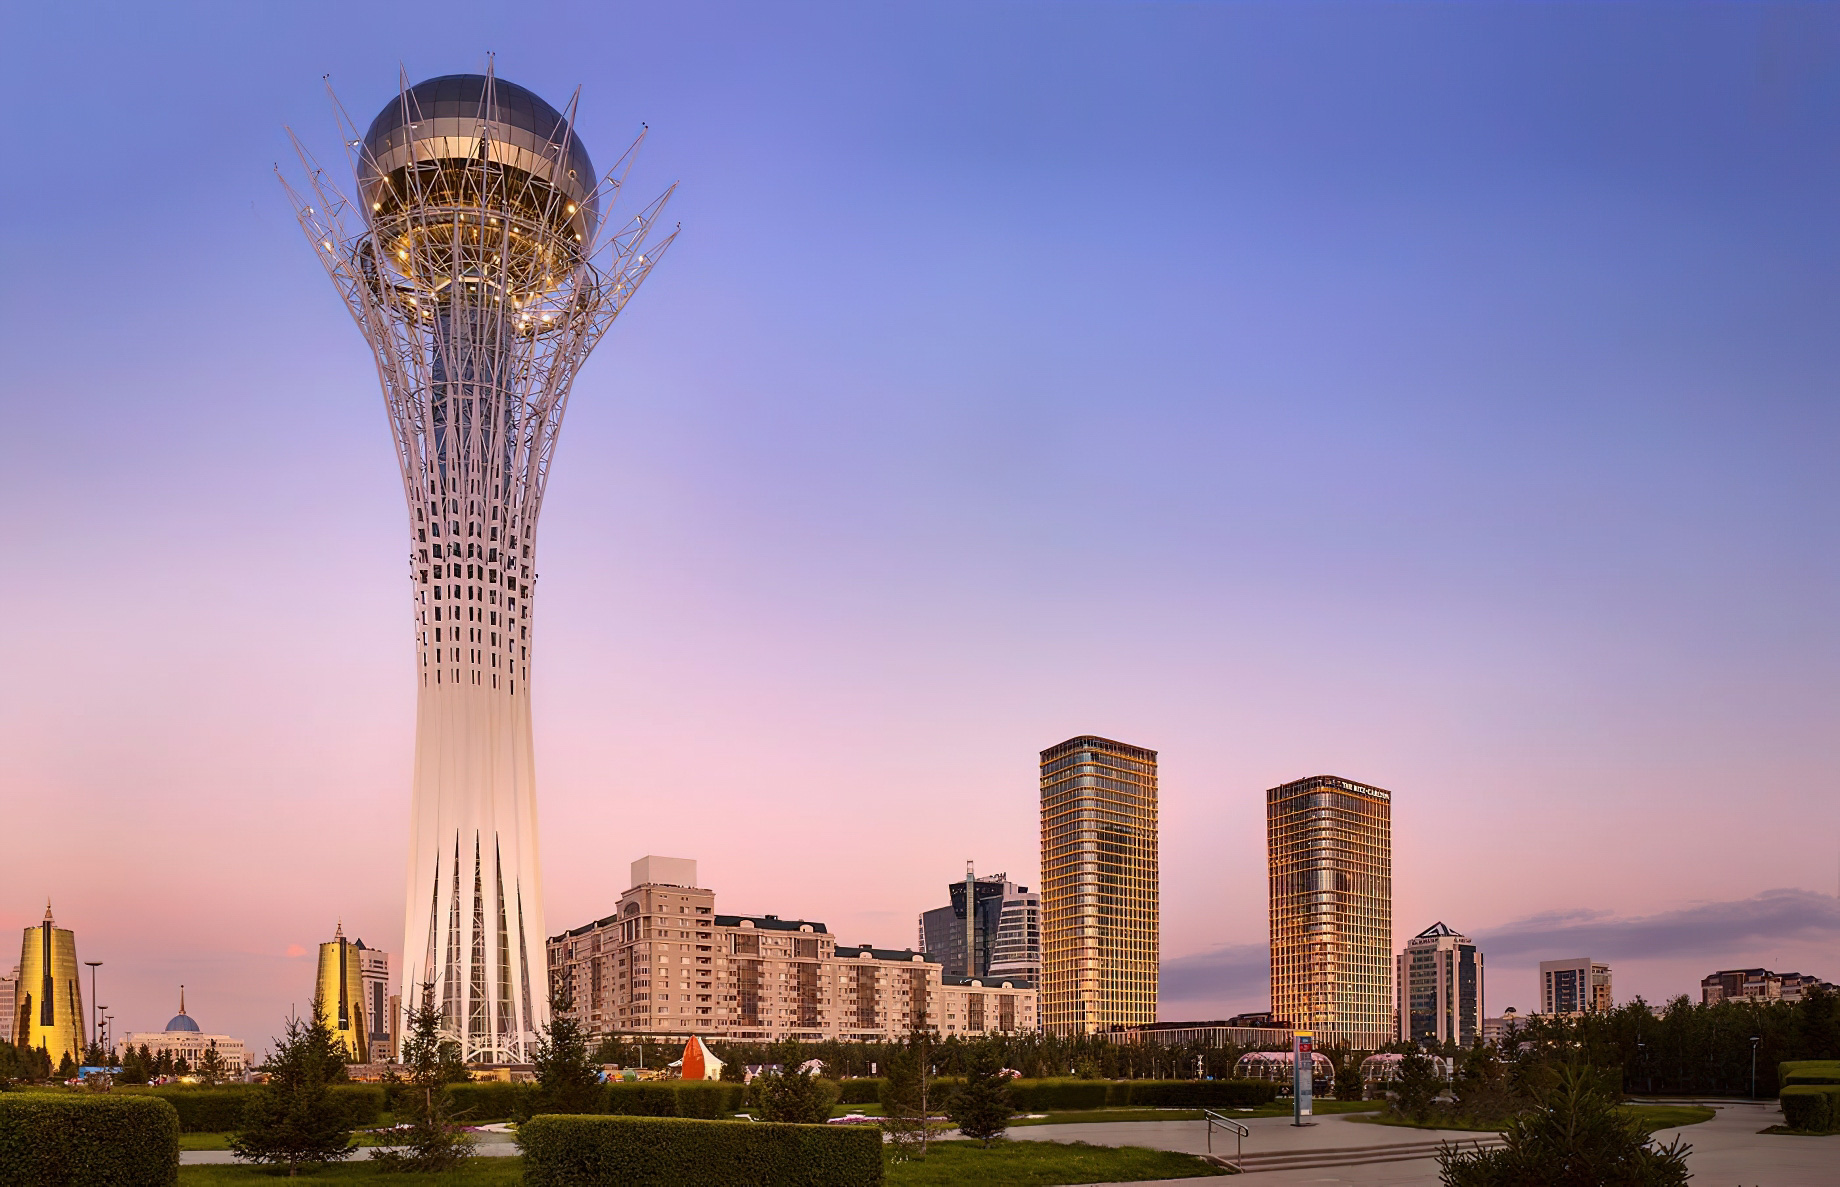 The Ritz-Carlton, Astana Hotel - Nur-Sultan, Kazakhstan - Exterior City View